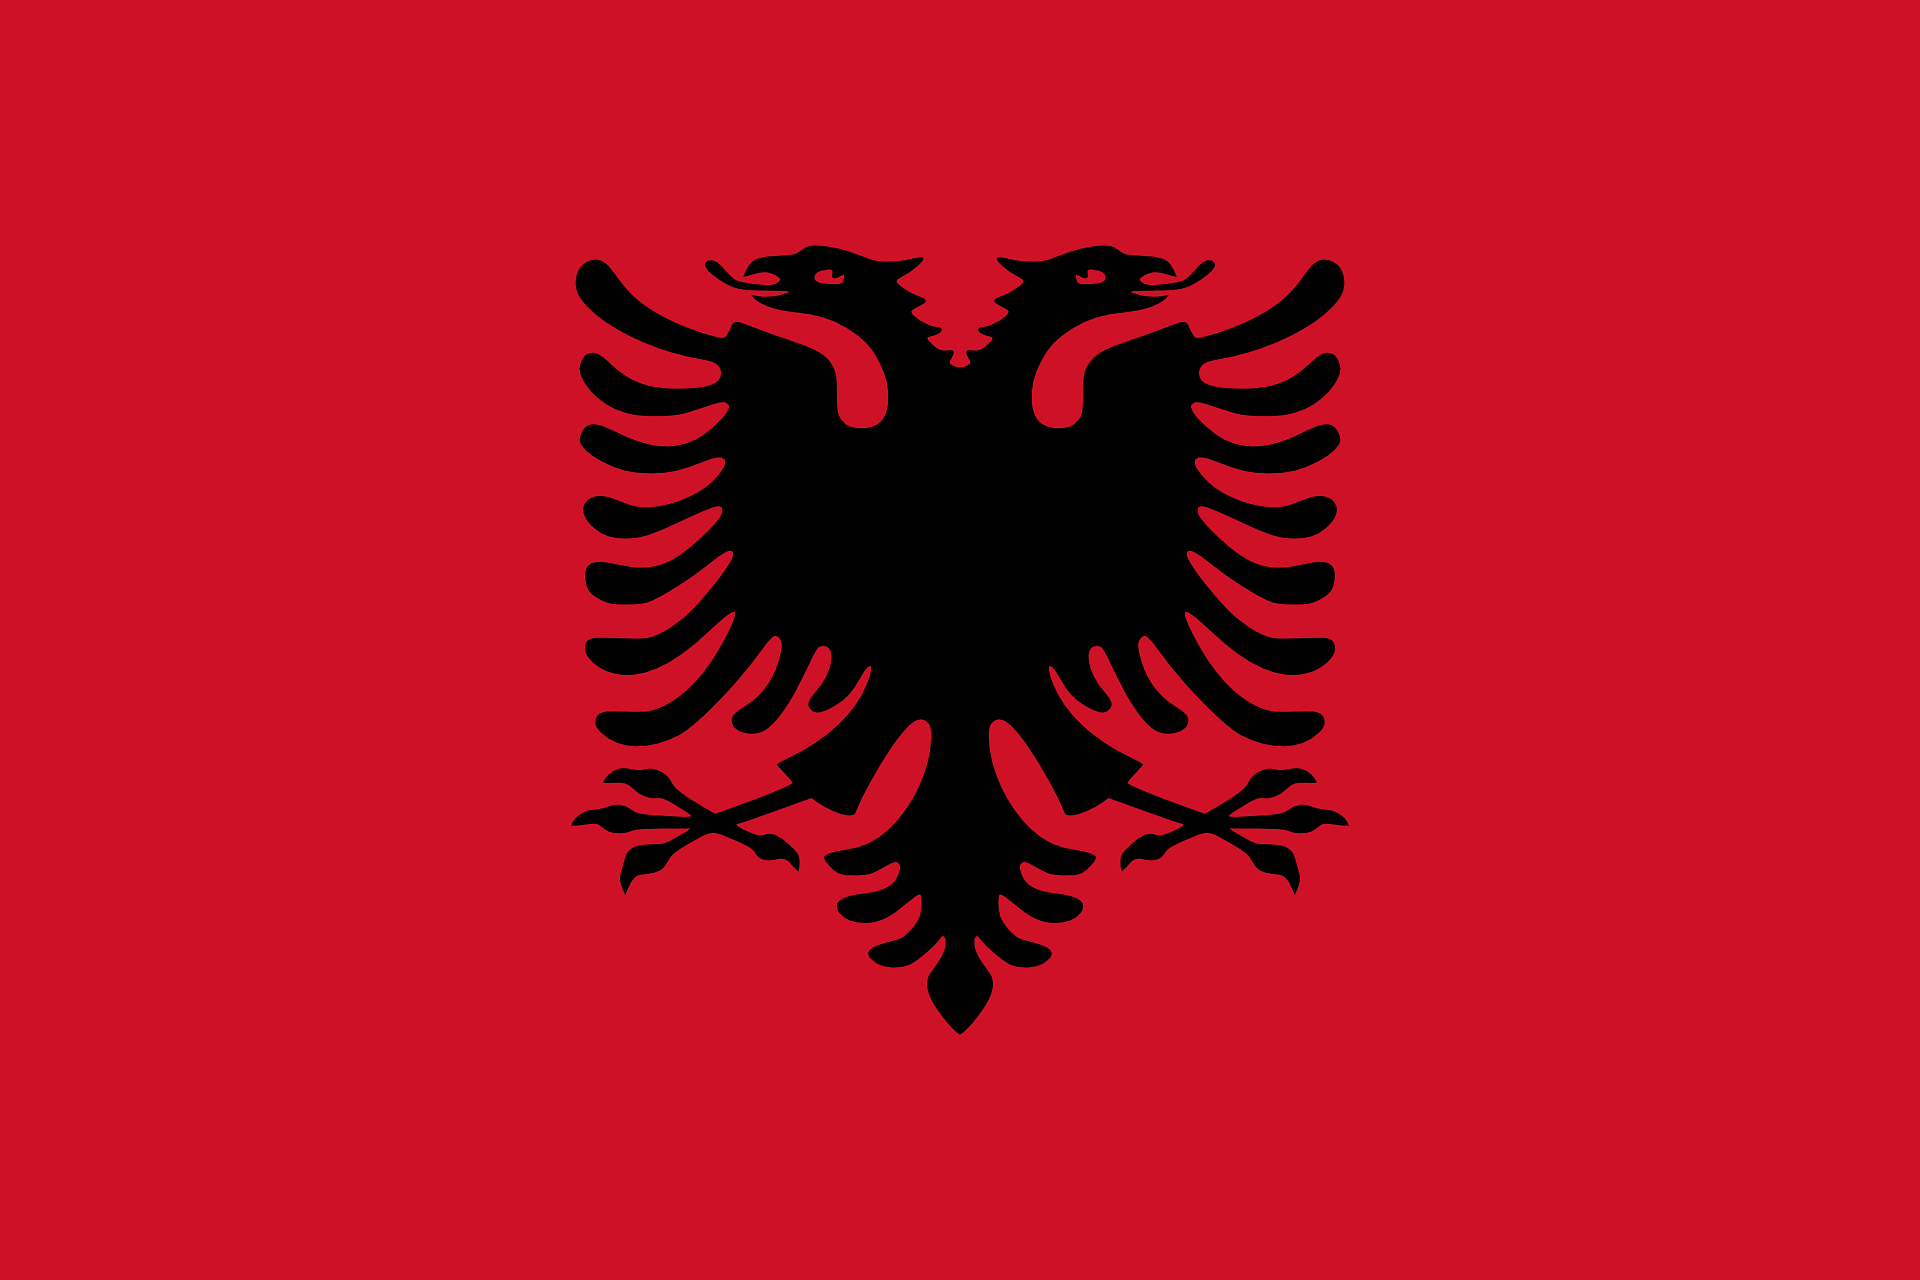 Czech Albanian Camber of Commerce - Albania flag